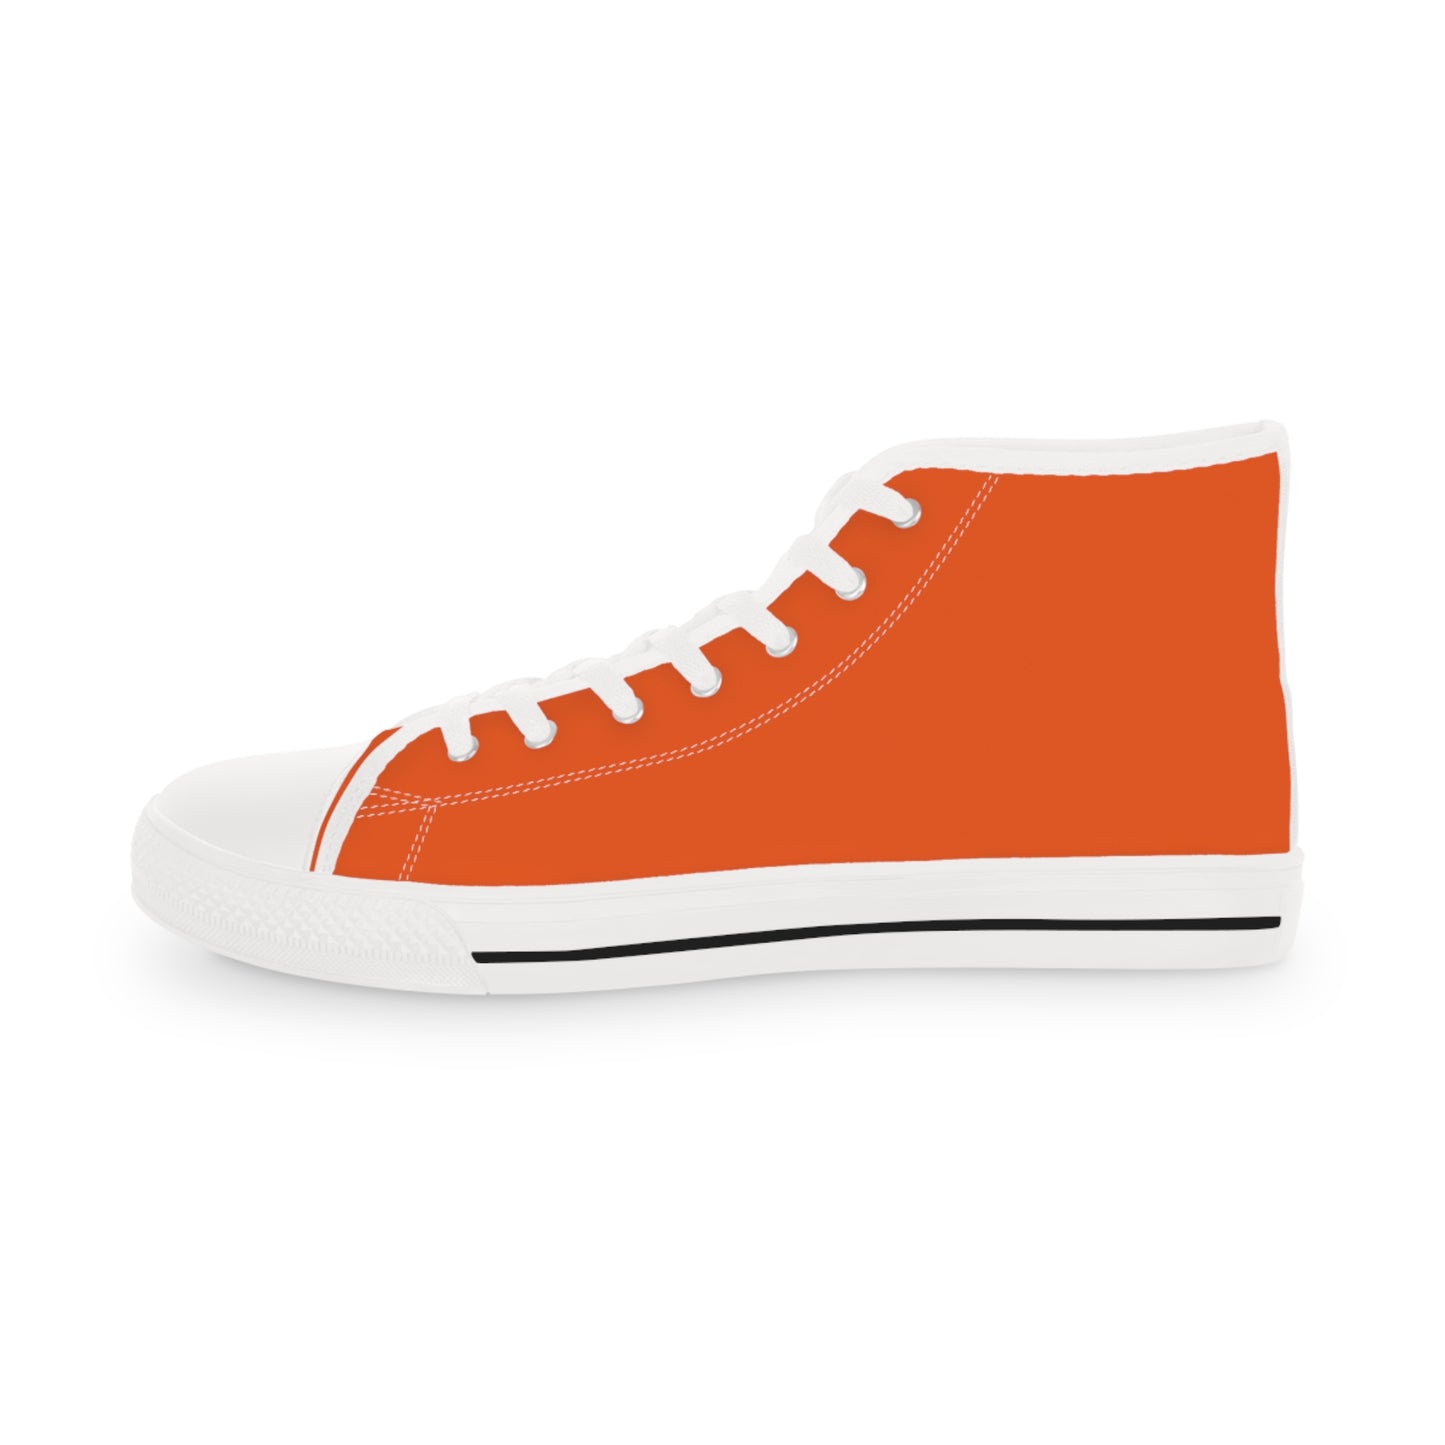 Men's High Top Sneakers - Dark Orange US 14 White sole